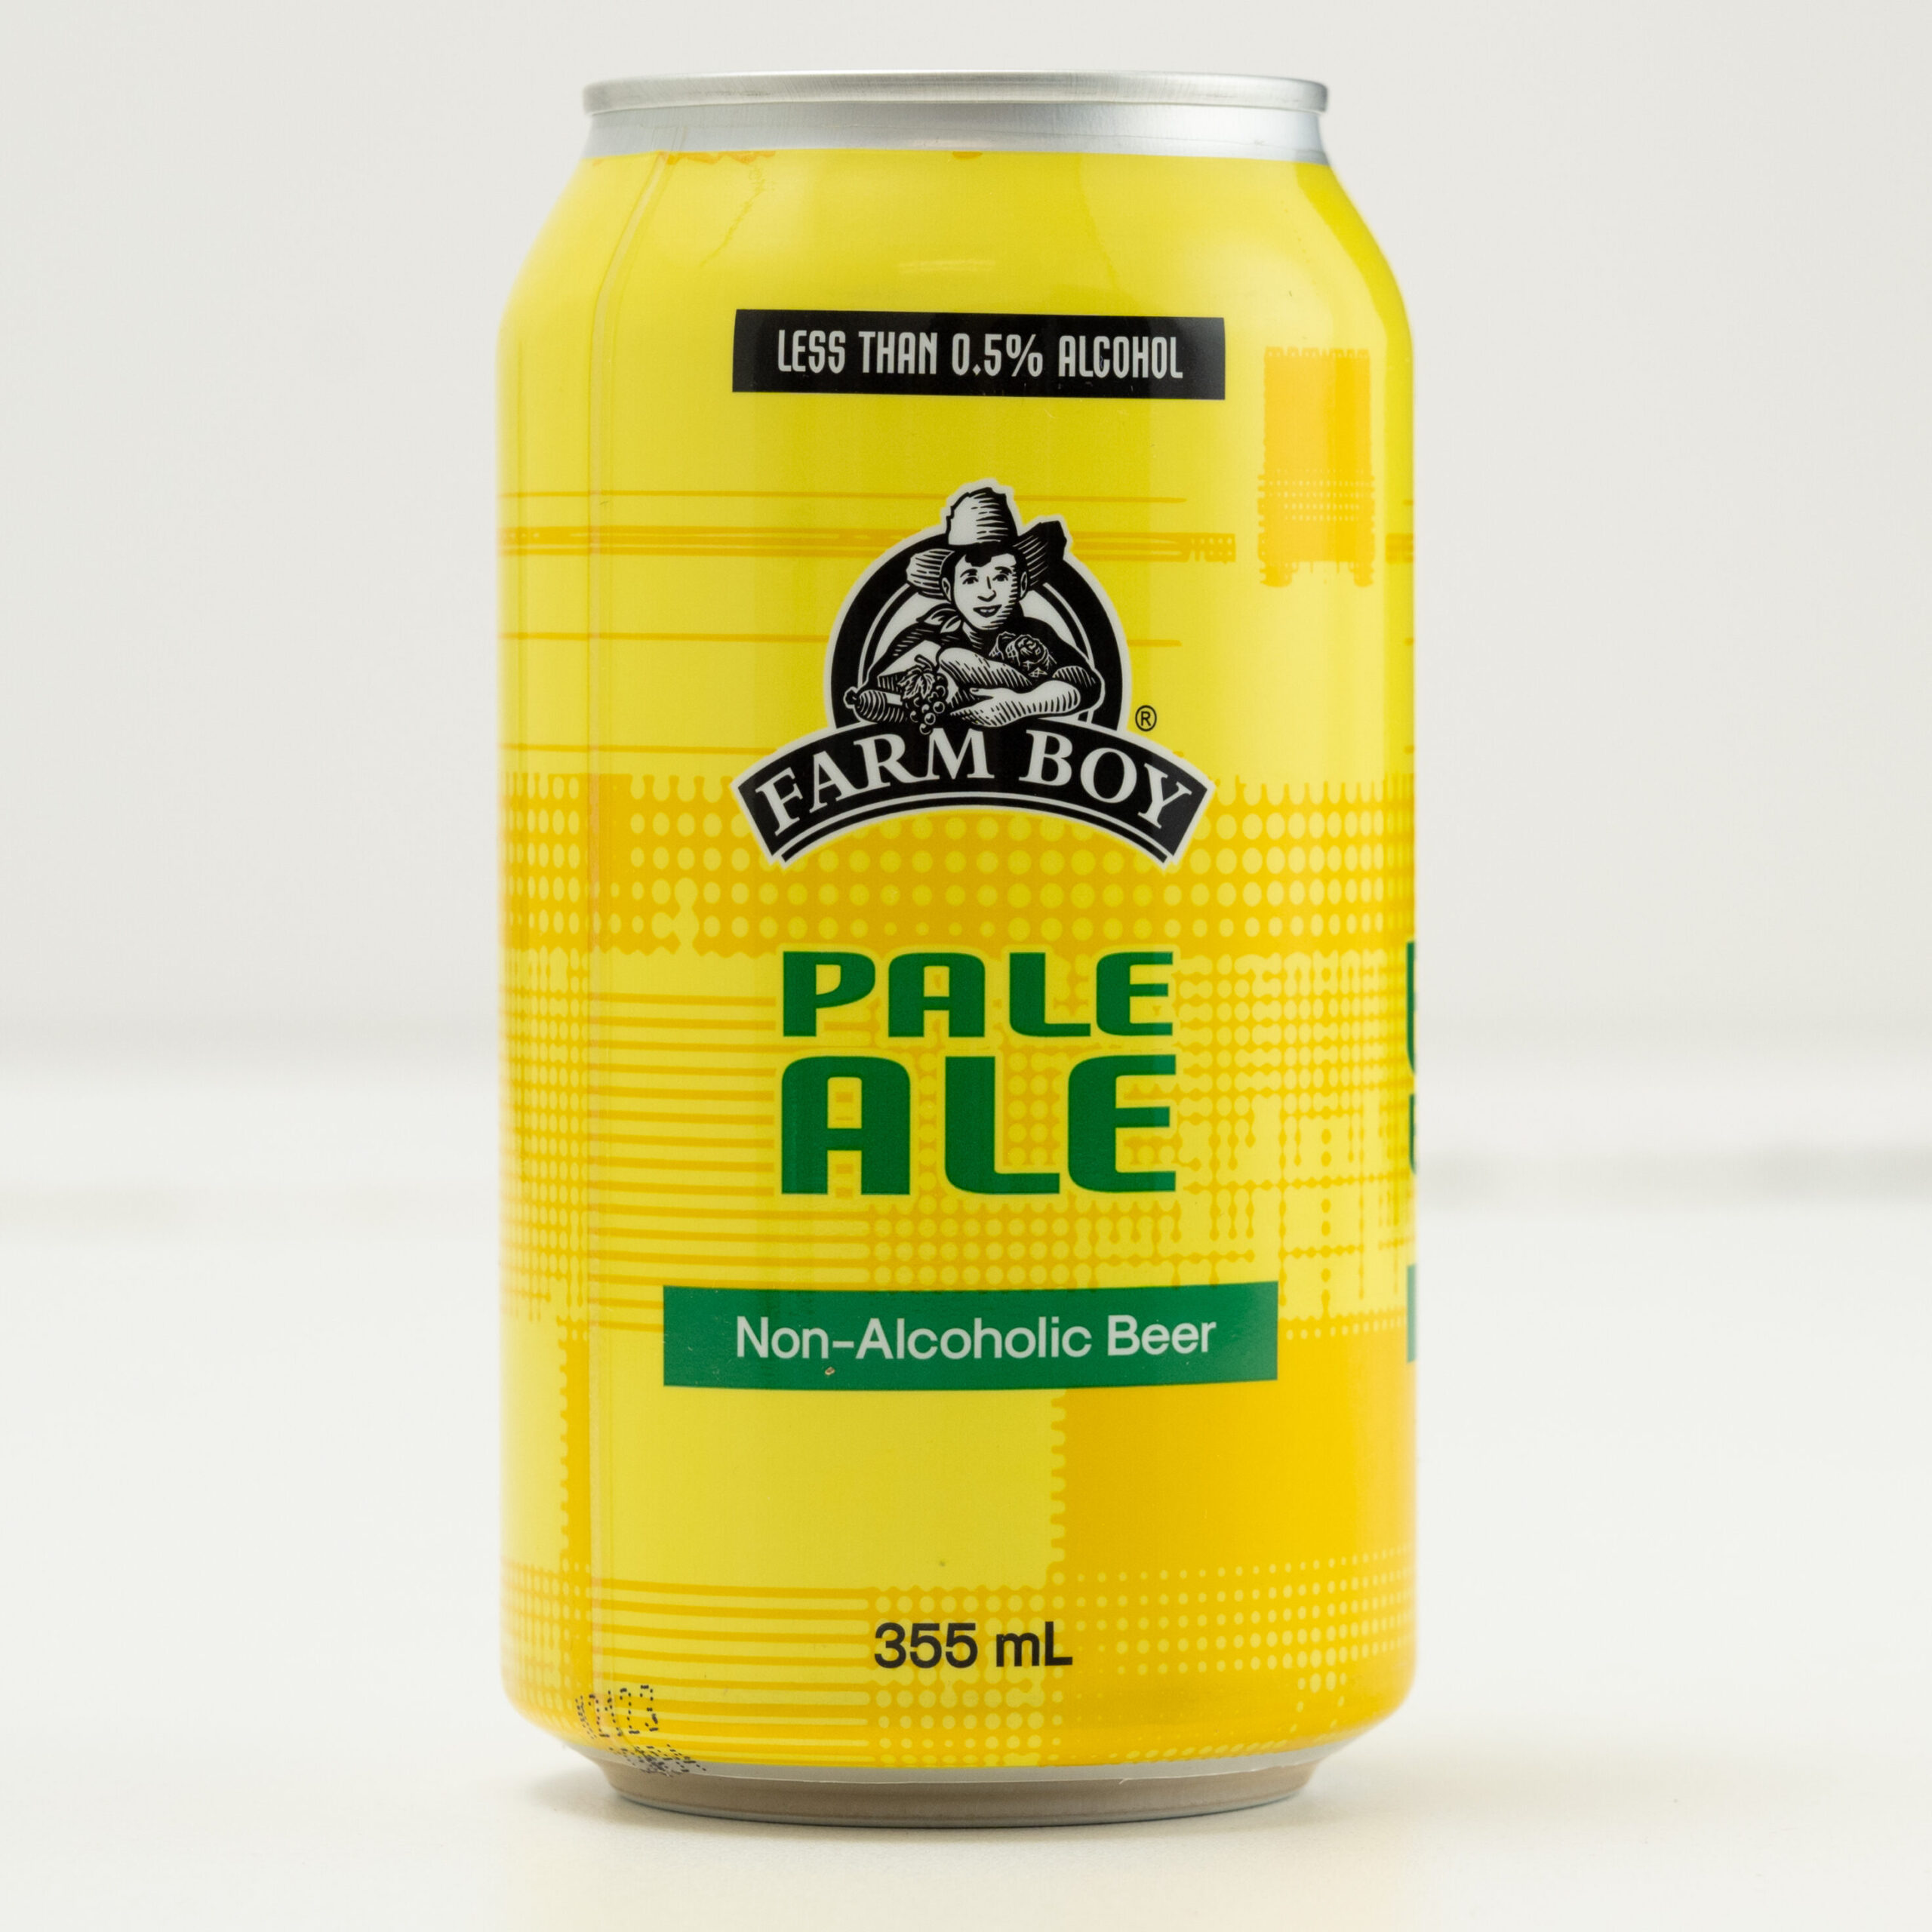 Farm Boy Pale Ale Non-Alcoholic Beer